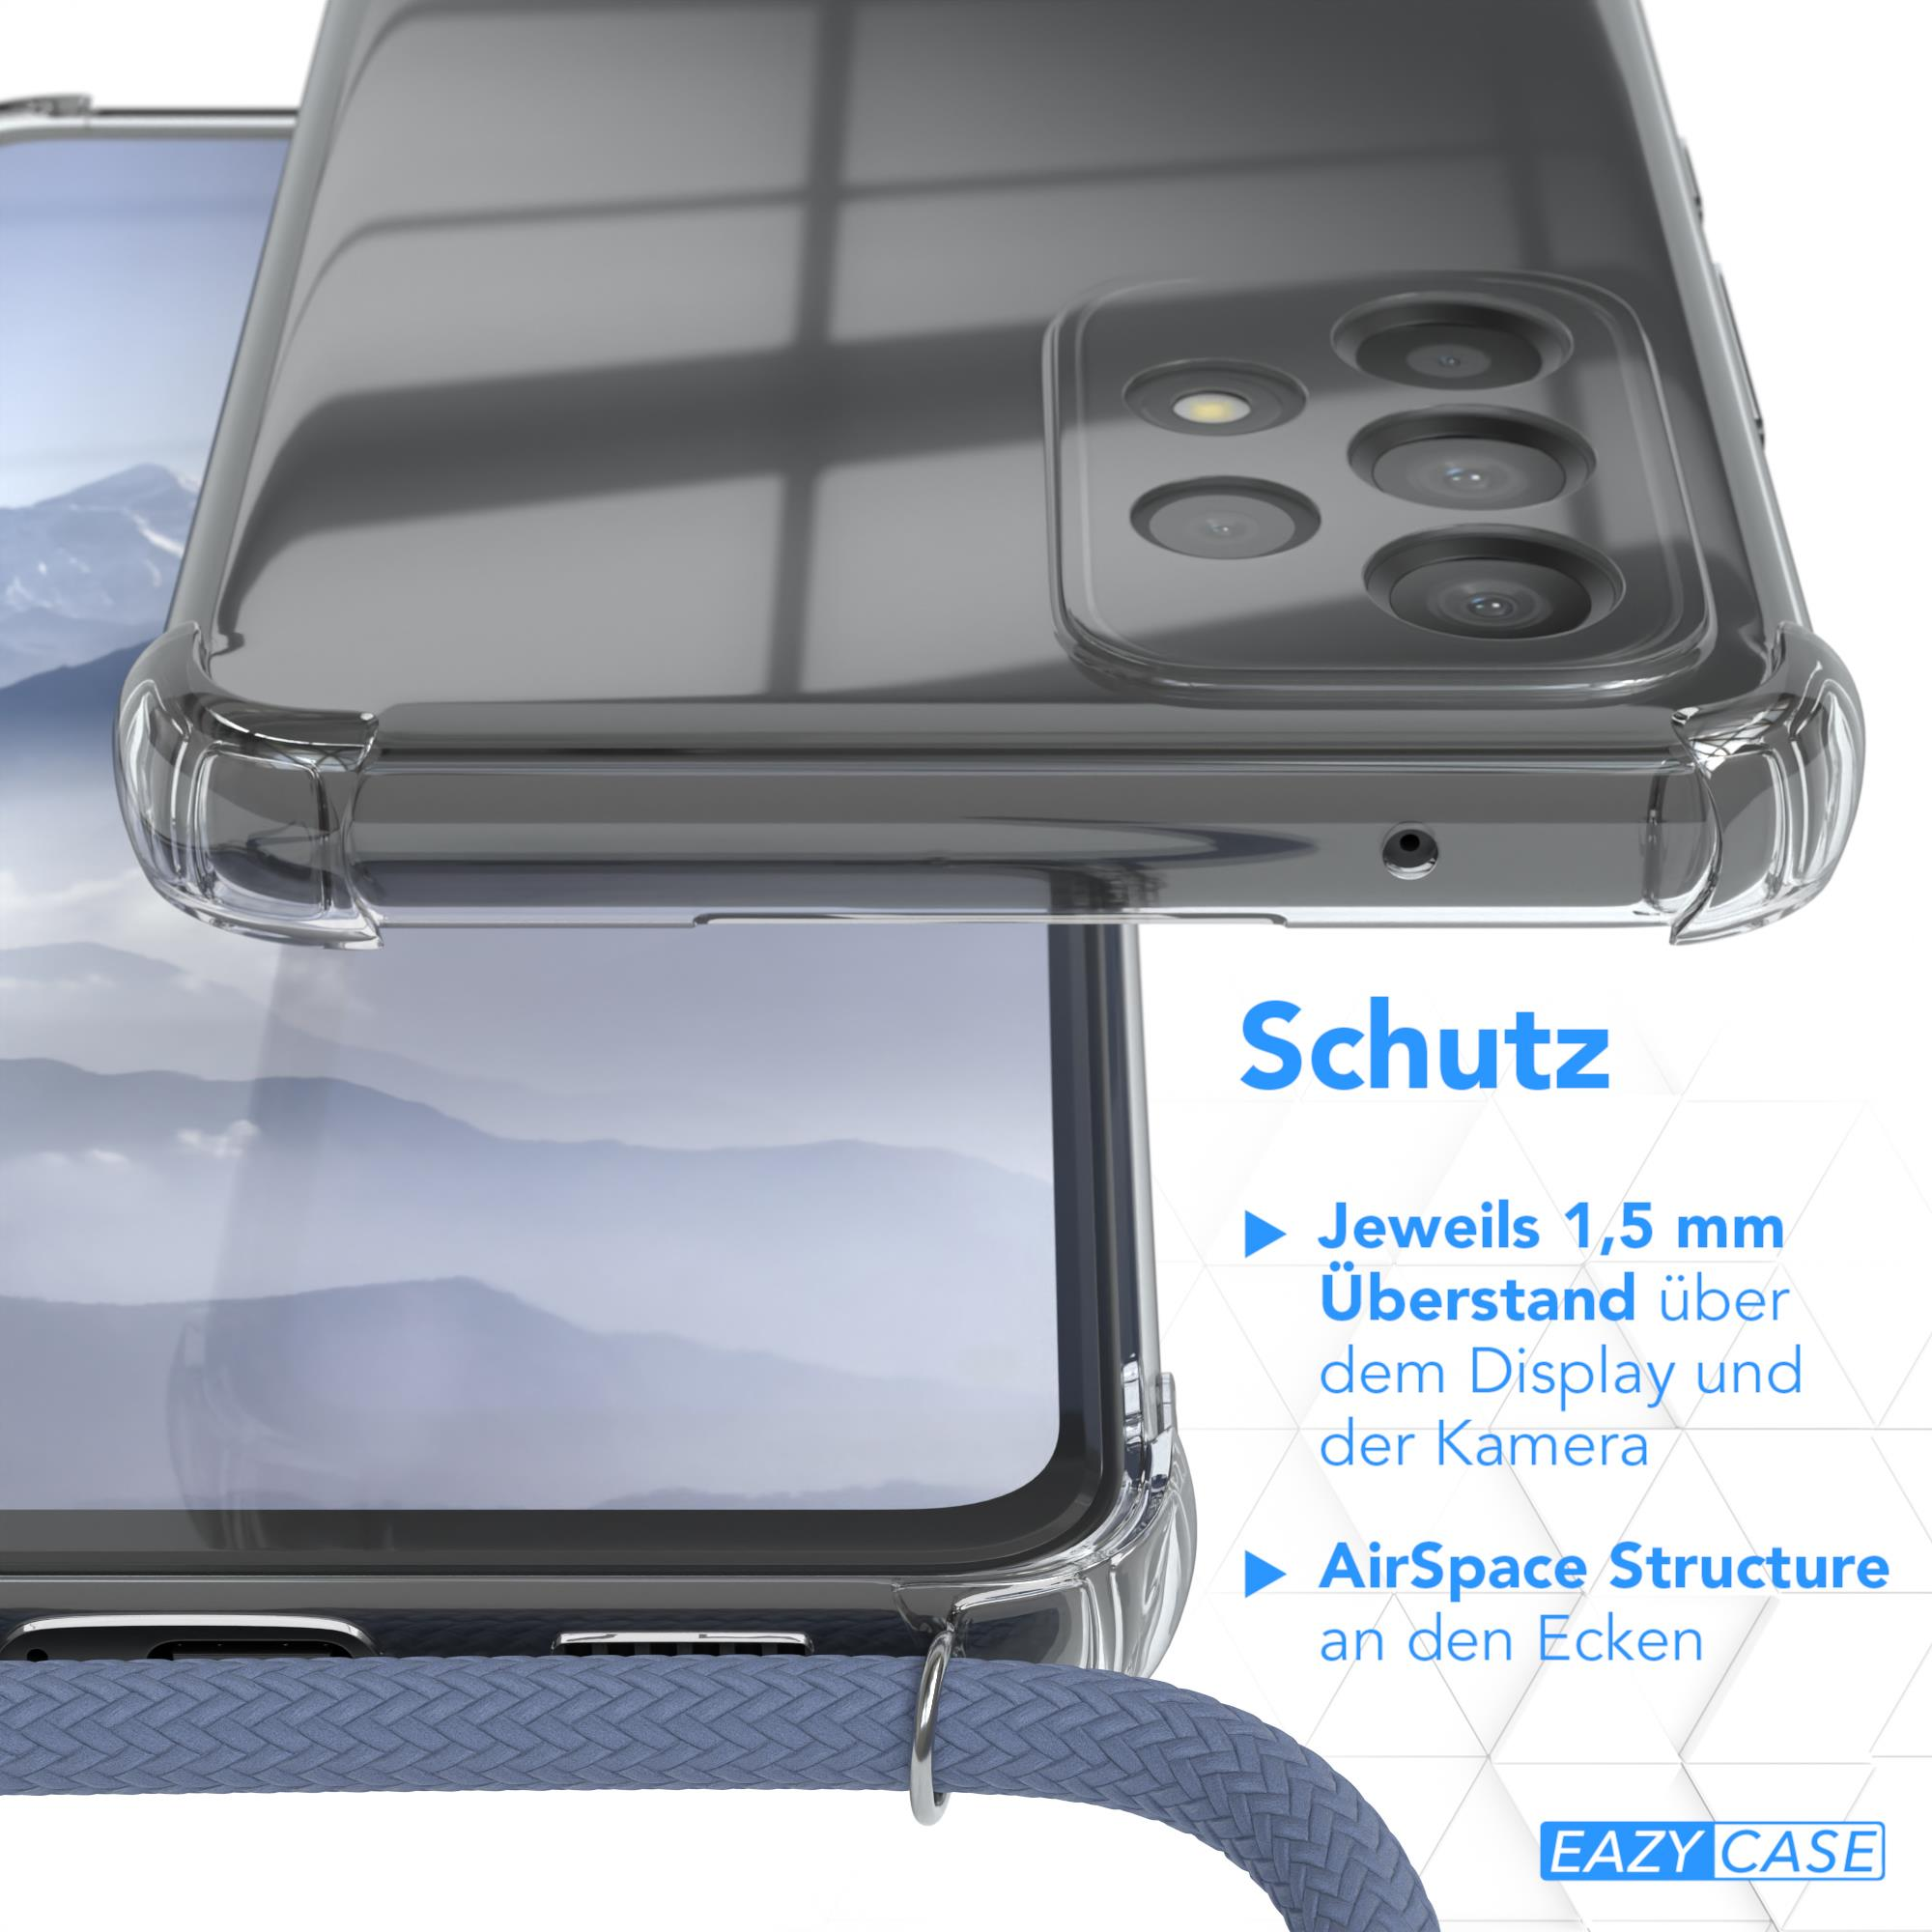 CASE Clear 5G, Umhängeband, Umhängetasche, Galaxy Cover Blau mit Samsung, EAZY A53